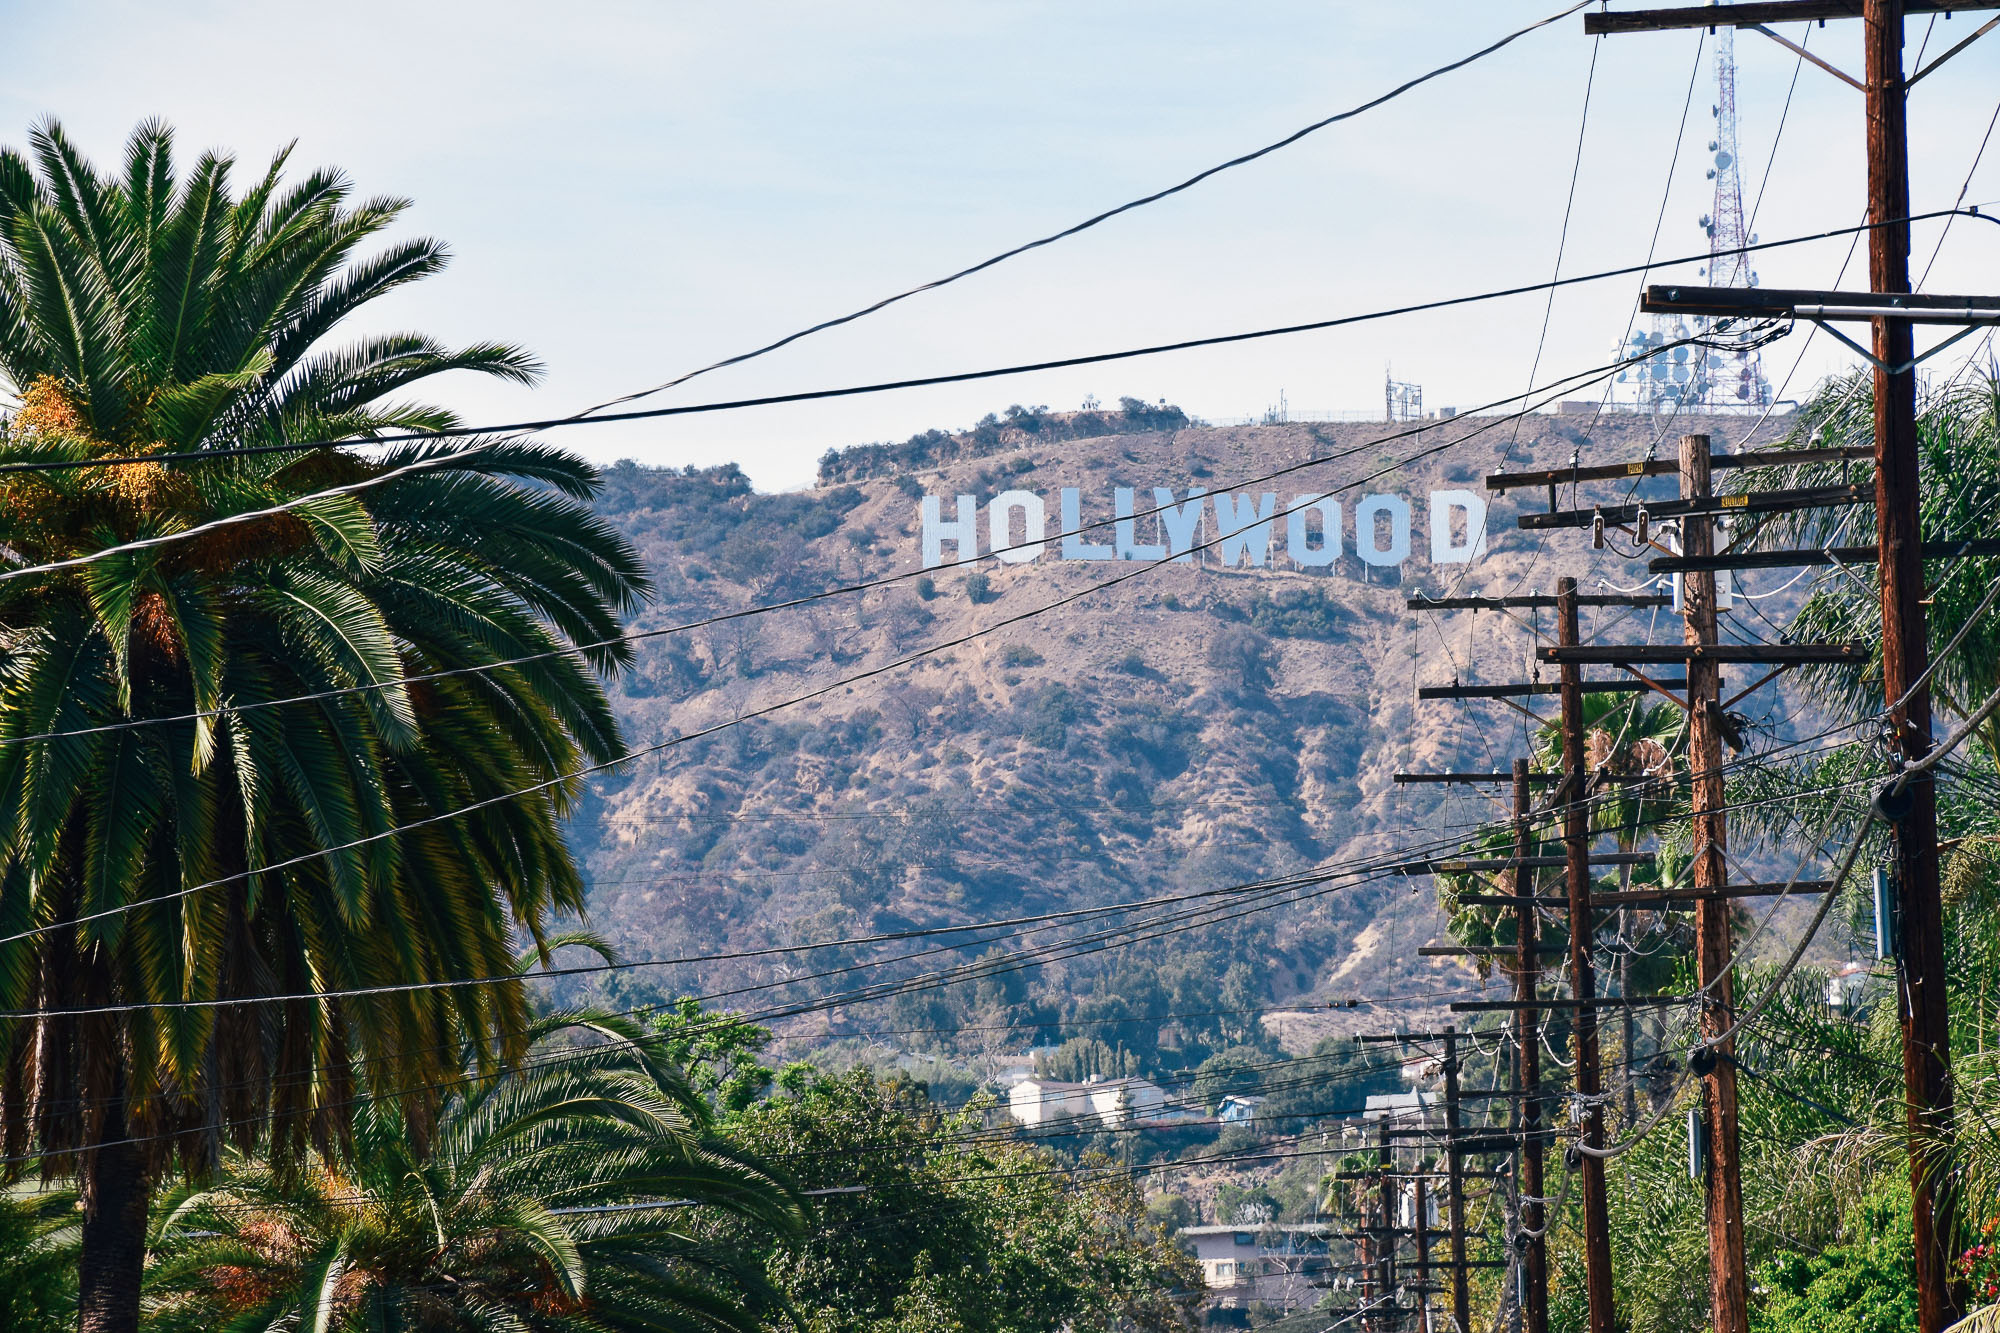 HOLLYWOOD LOS ANGELES